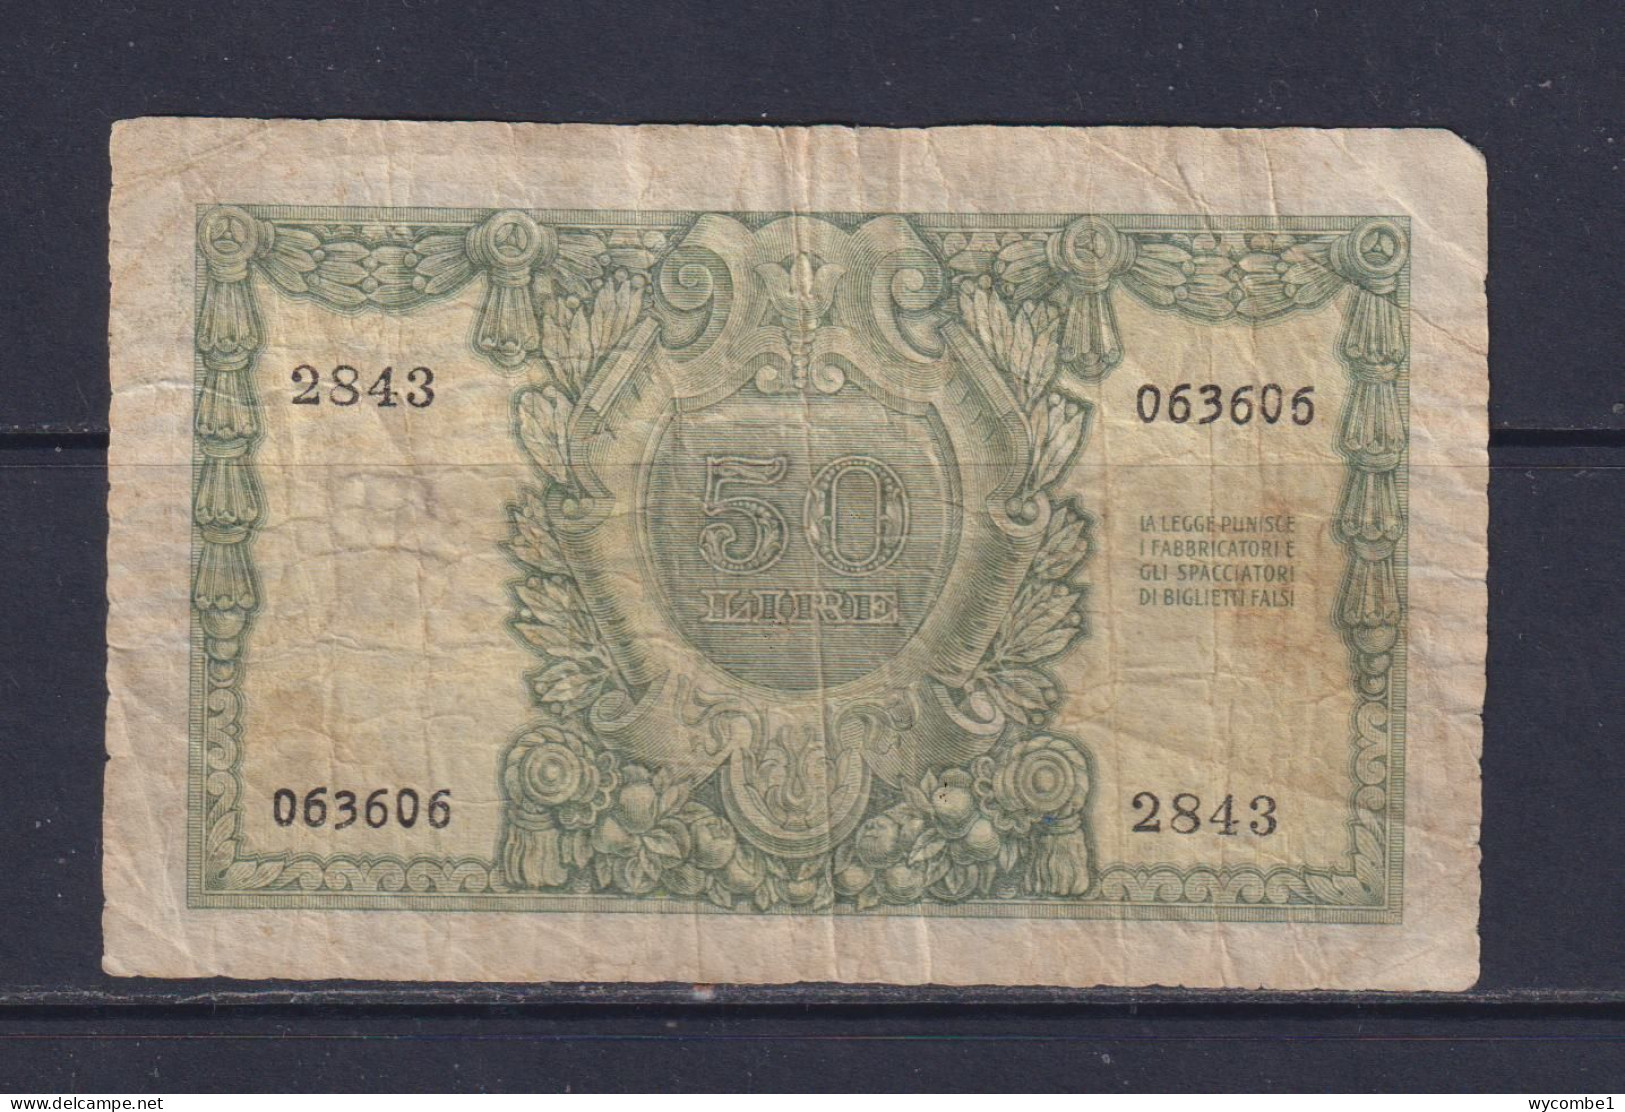 ITALY - 1951 50 Lira Circulated Banknote - 50 Liras